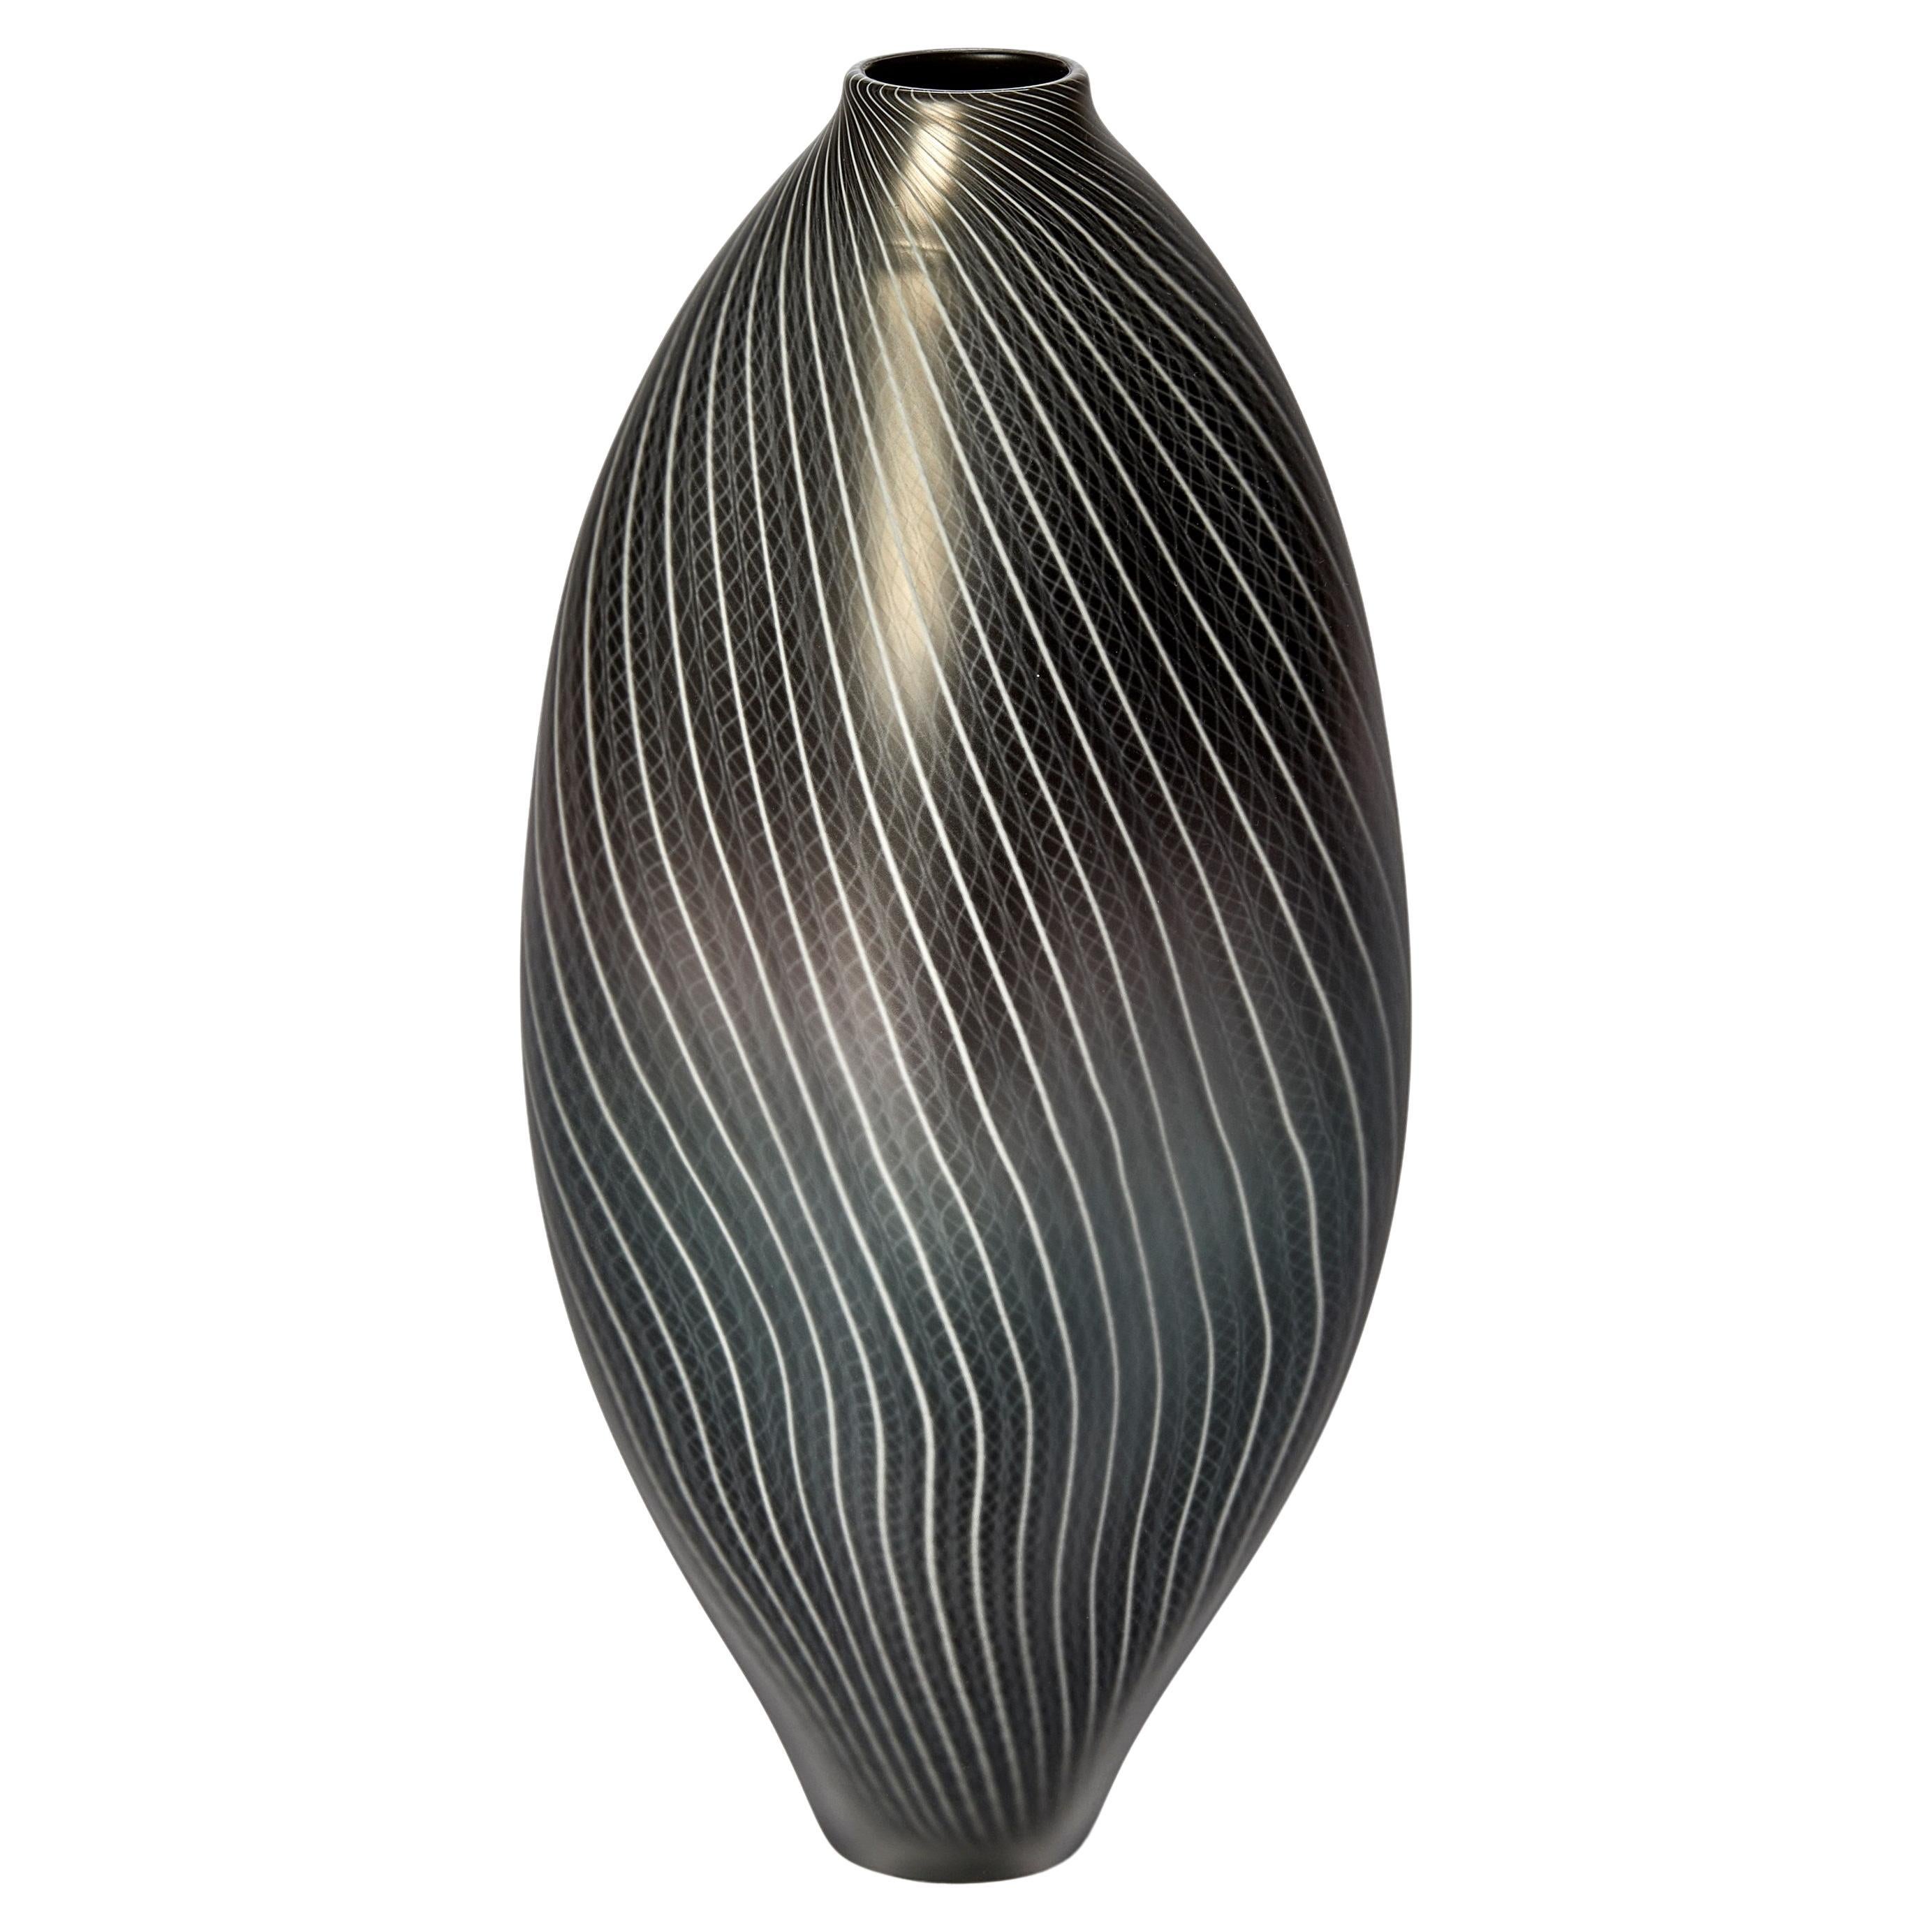  Stratiform 2.1.001, white & metallic grey handblown glass vessel by Liam Reeves